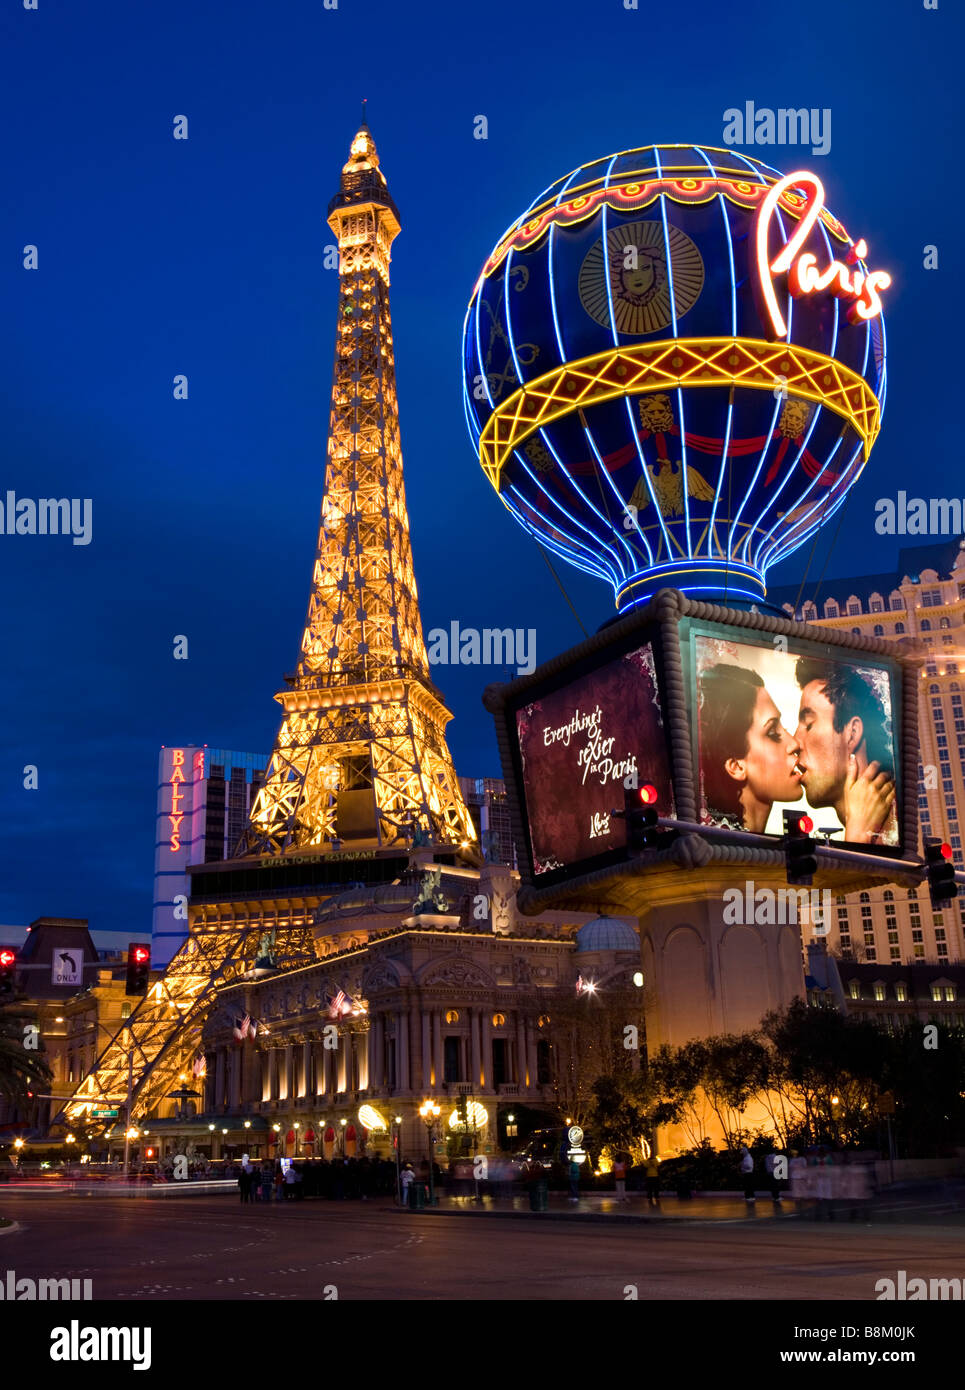 4⋆ PARIS LAS VEGAS HOTEL & CASINO ≡ Las Vegas, NV, United States